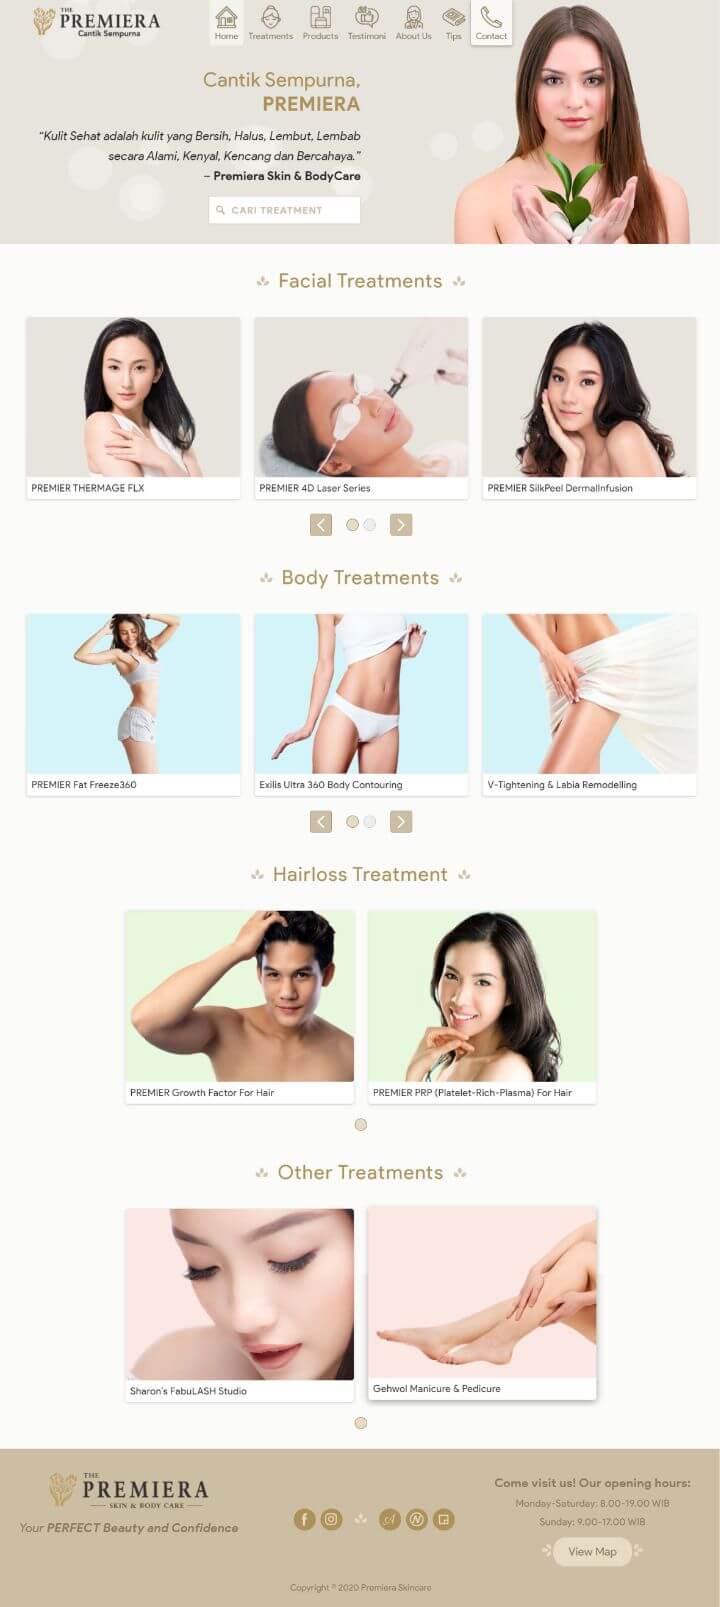 Premiera Skincare Website Screenshot